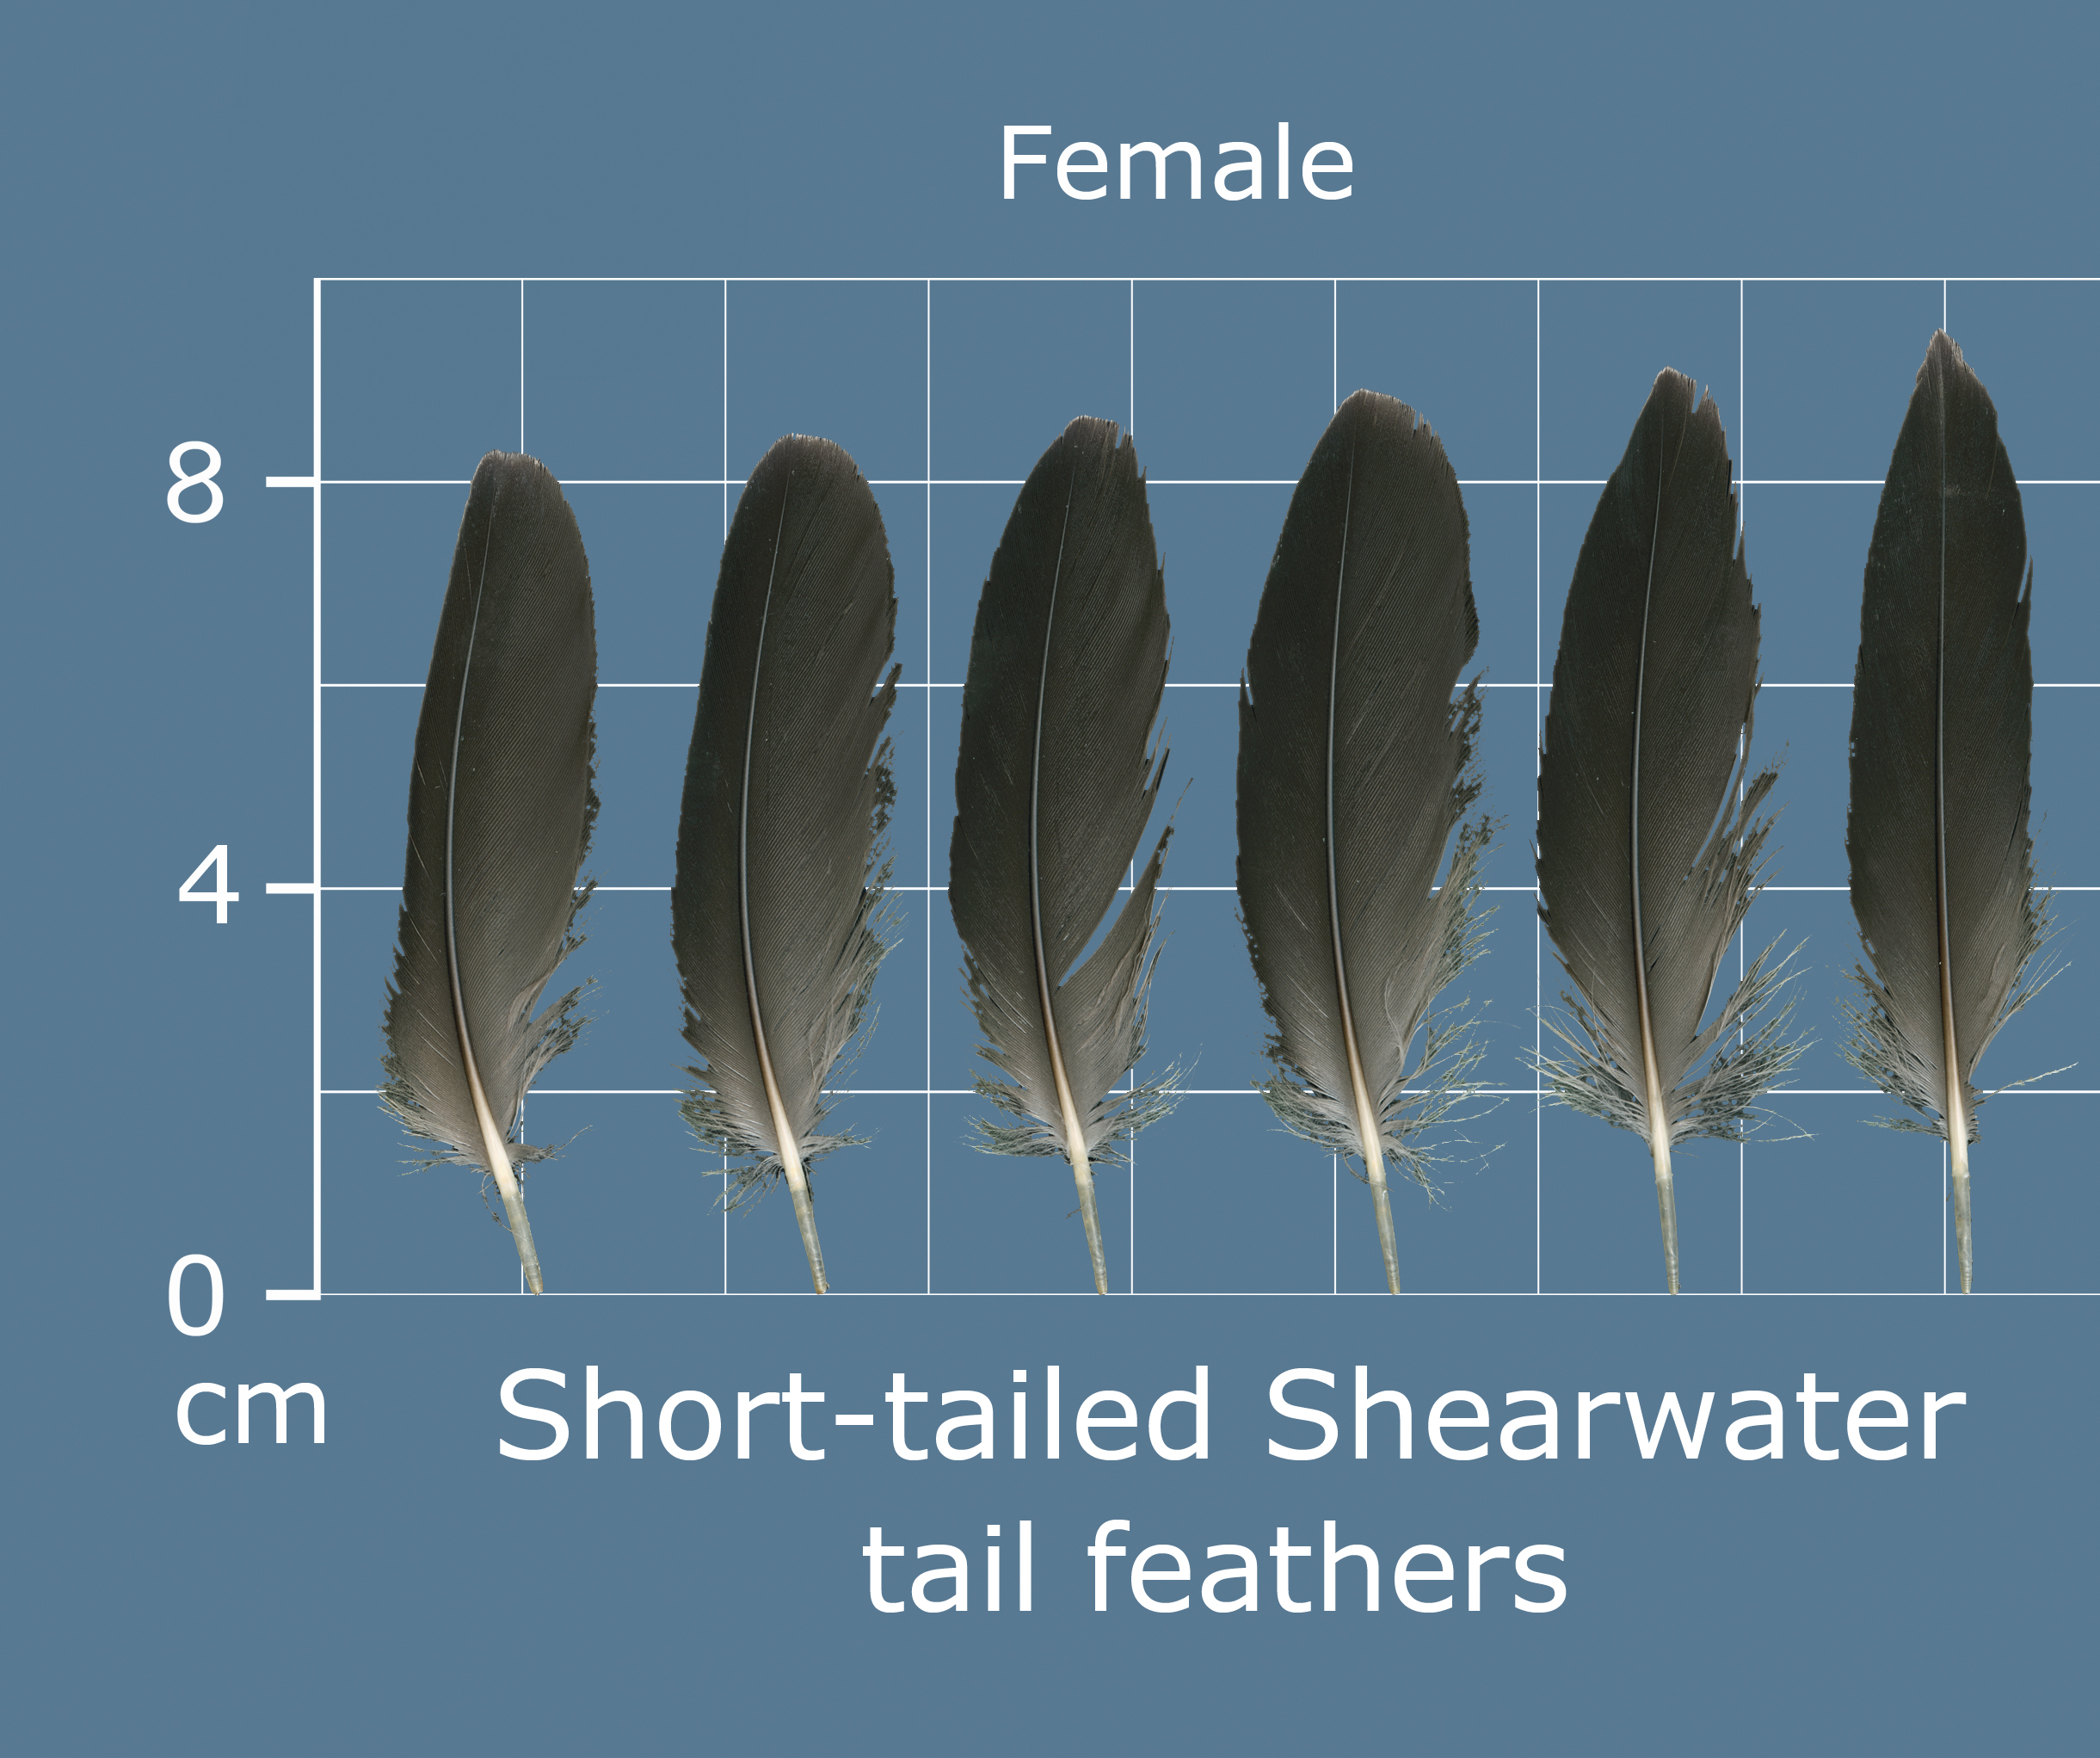 Short-tailed Shearwater